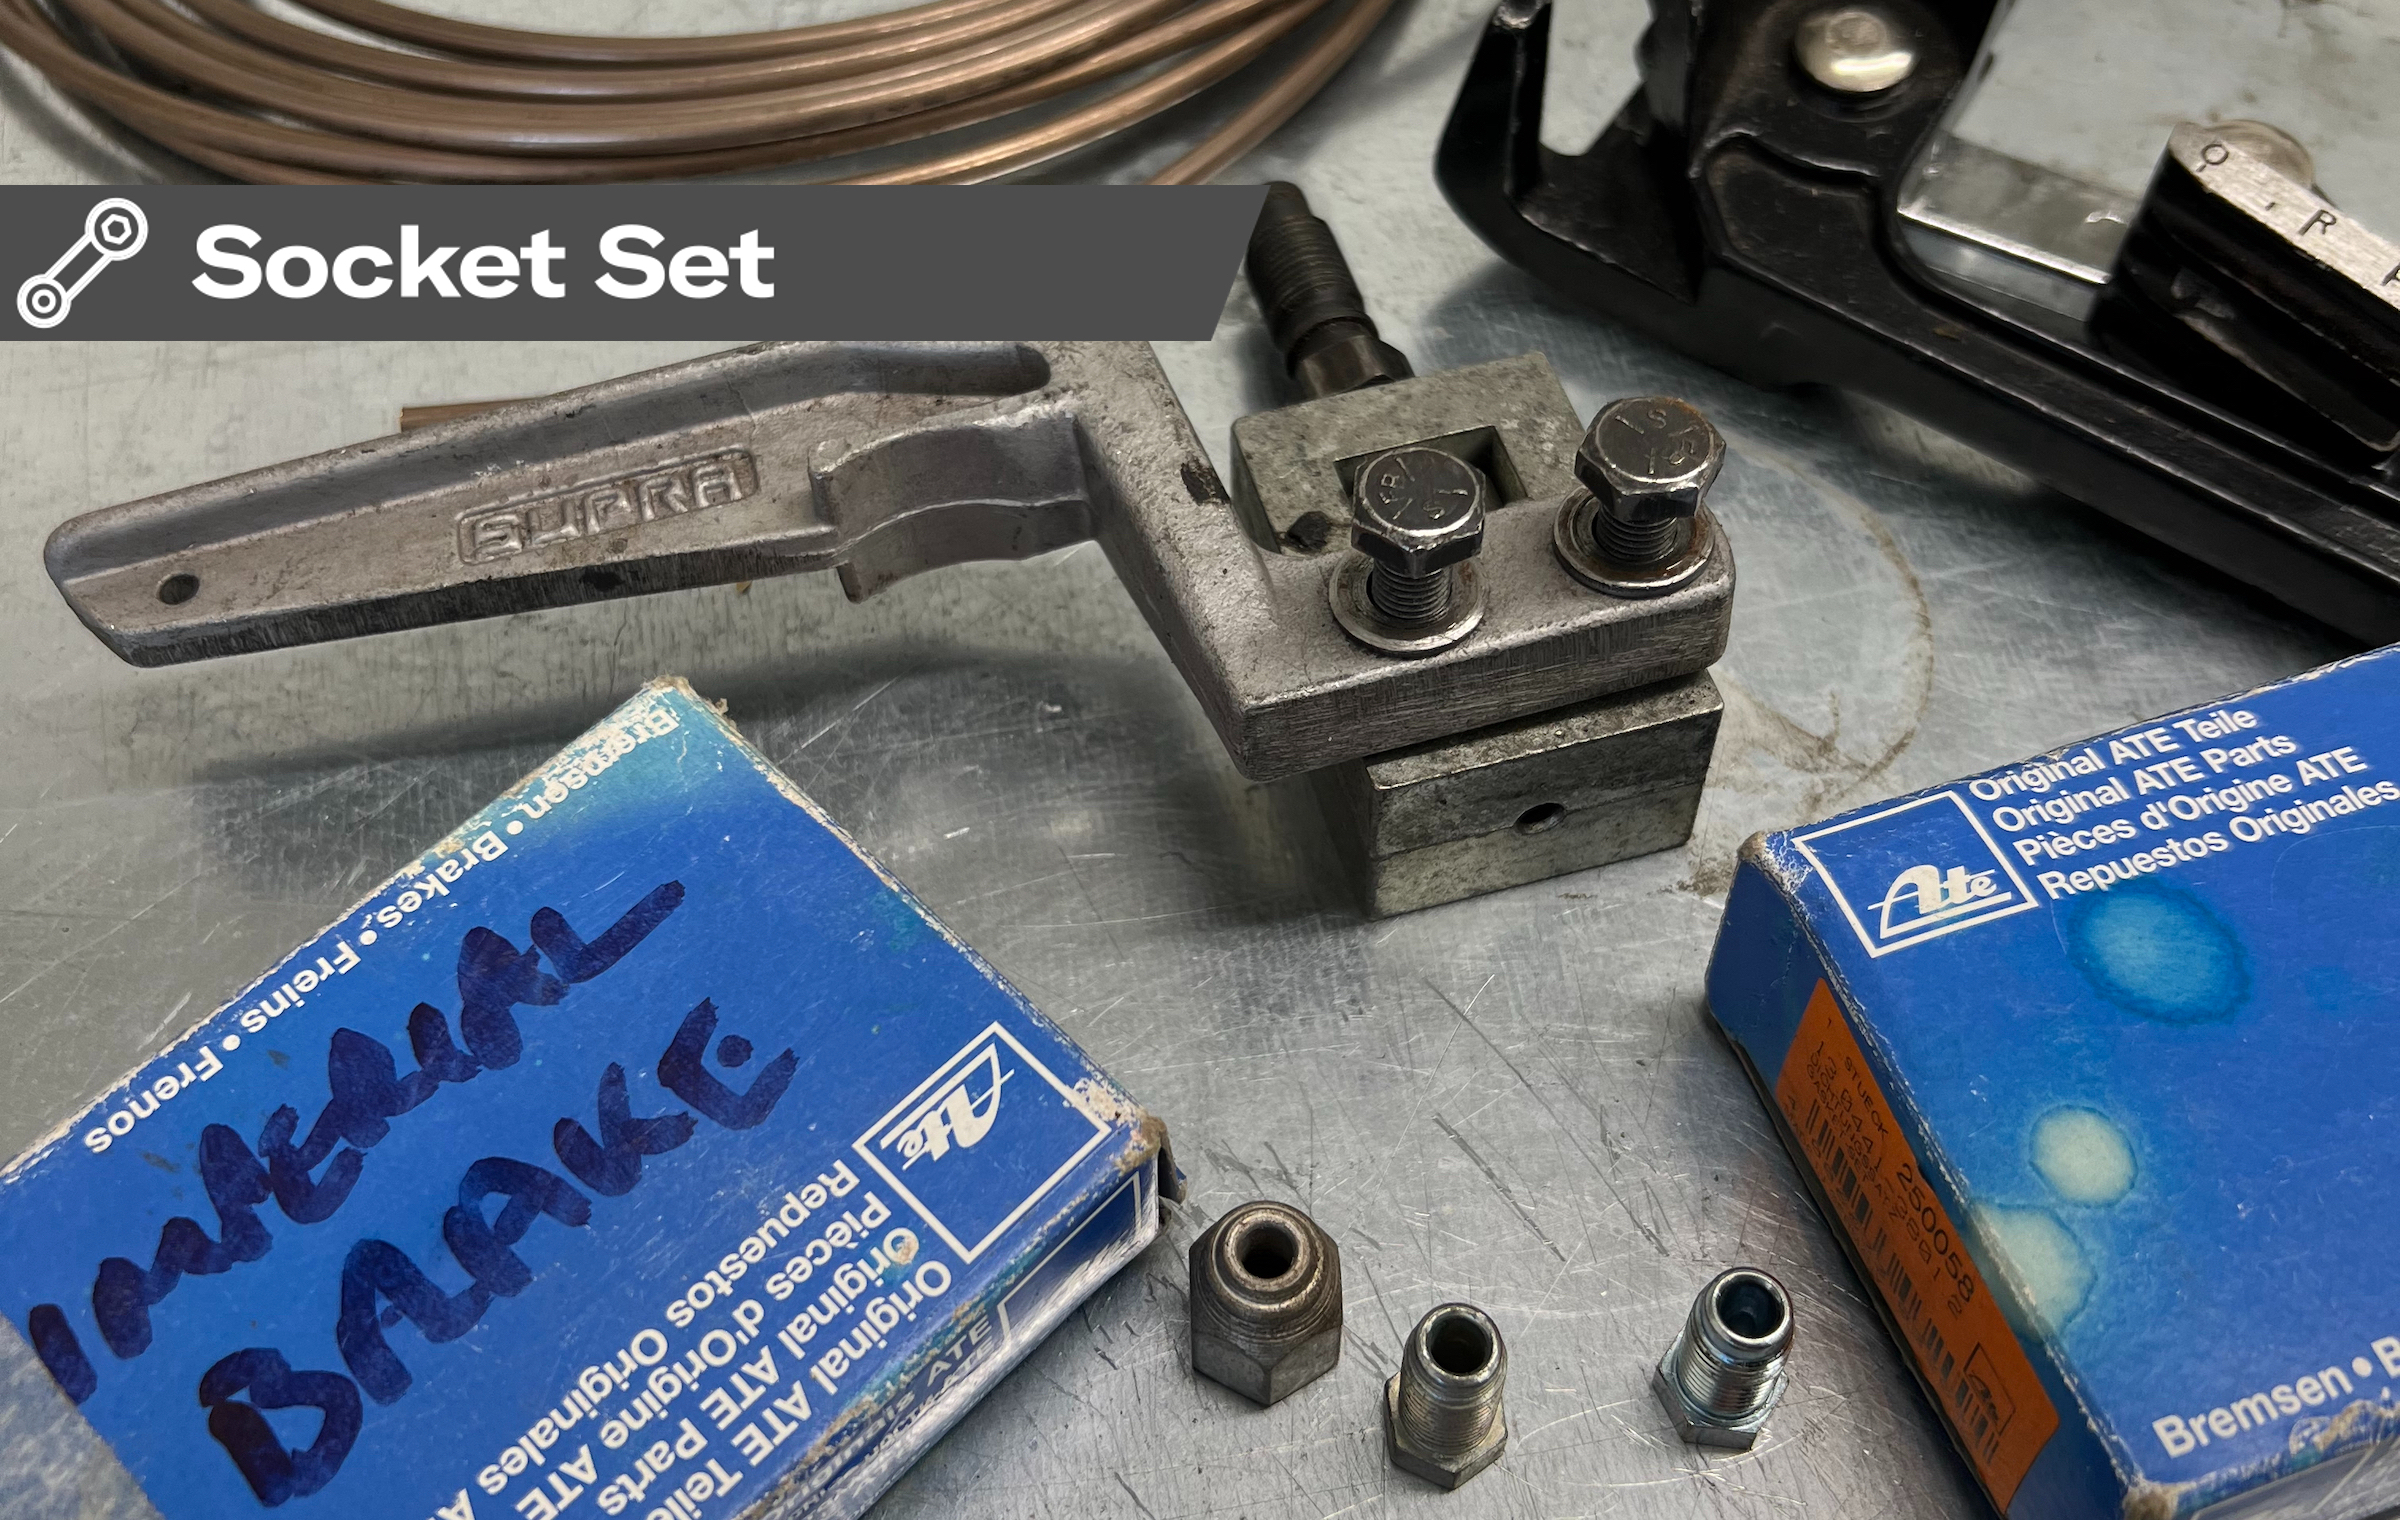 Socket Set: Making brake lines isn’t a dark art